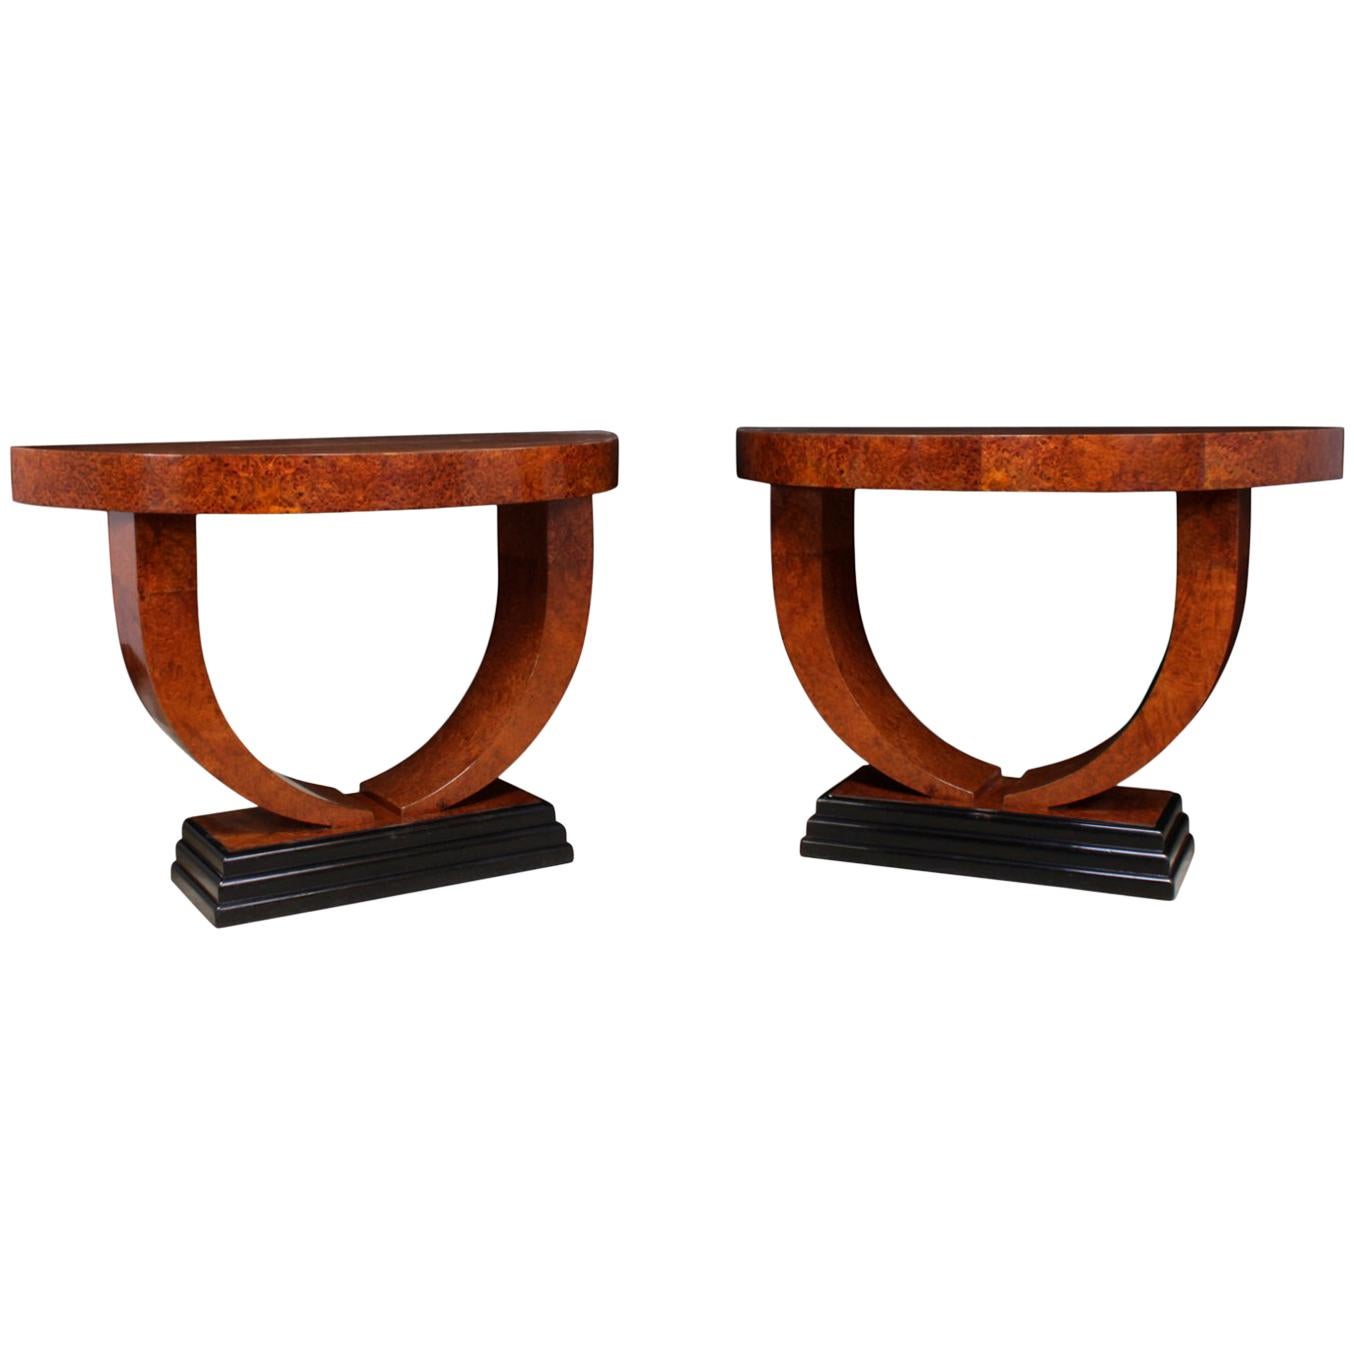 Pair of Art Deco Demilune Console Tables For Sale